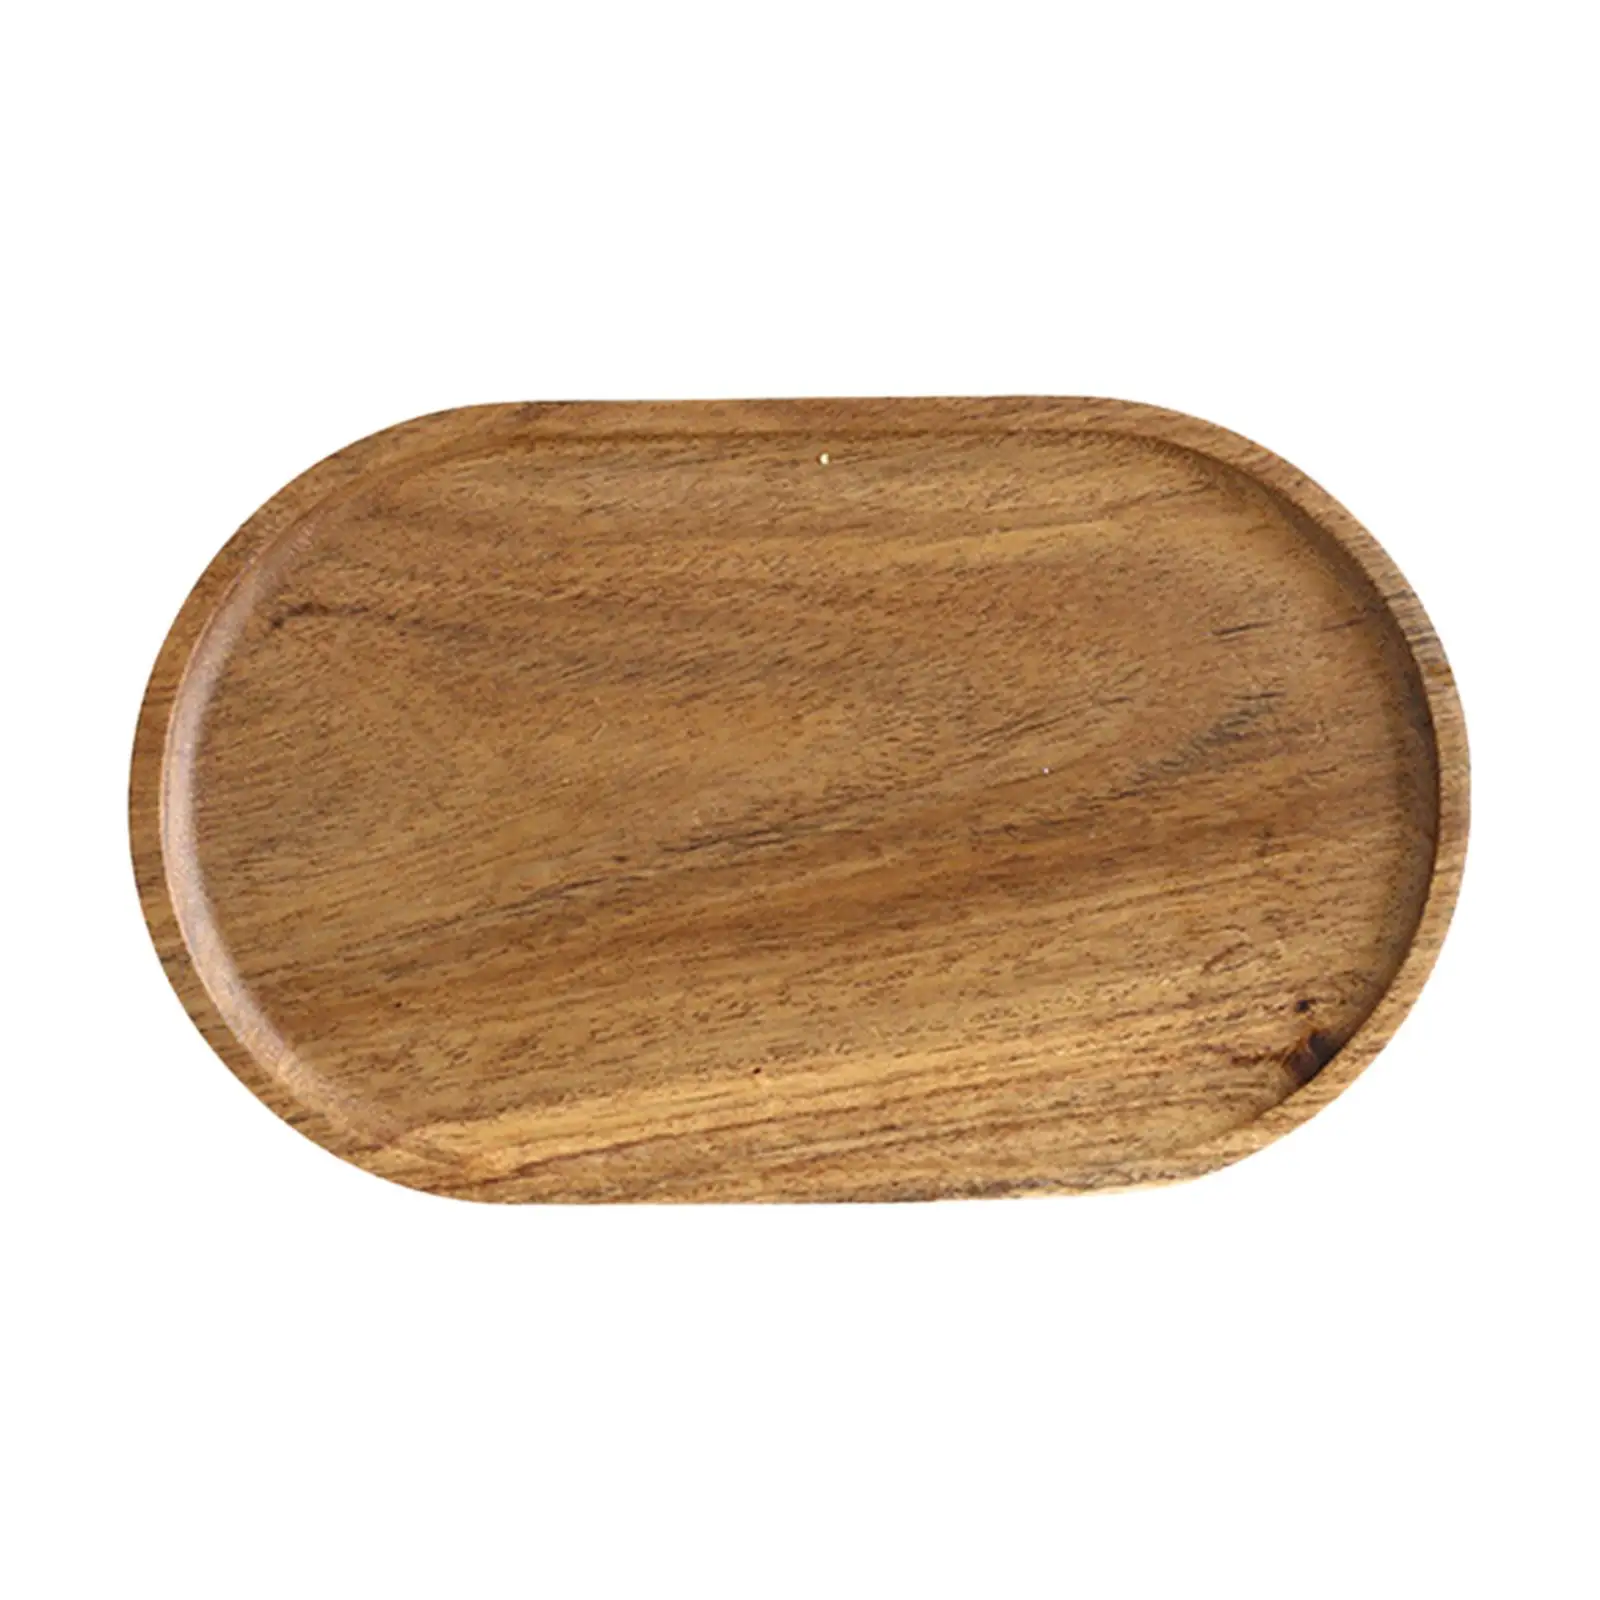 Wooden Serving Plate Cheese Platter Charcuterie Board Decorative Dish Wood Tray for Restaurant Breakfast BBQ Sandwich Steak